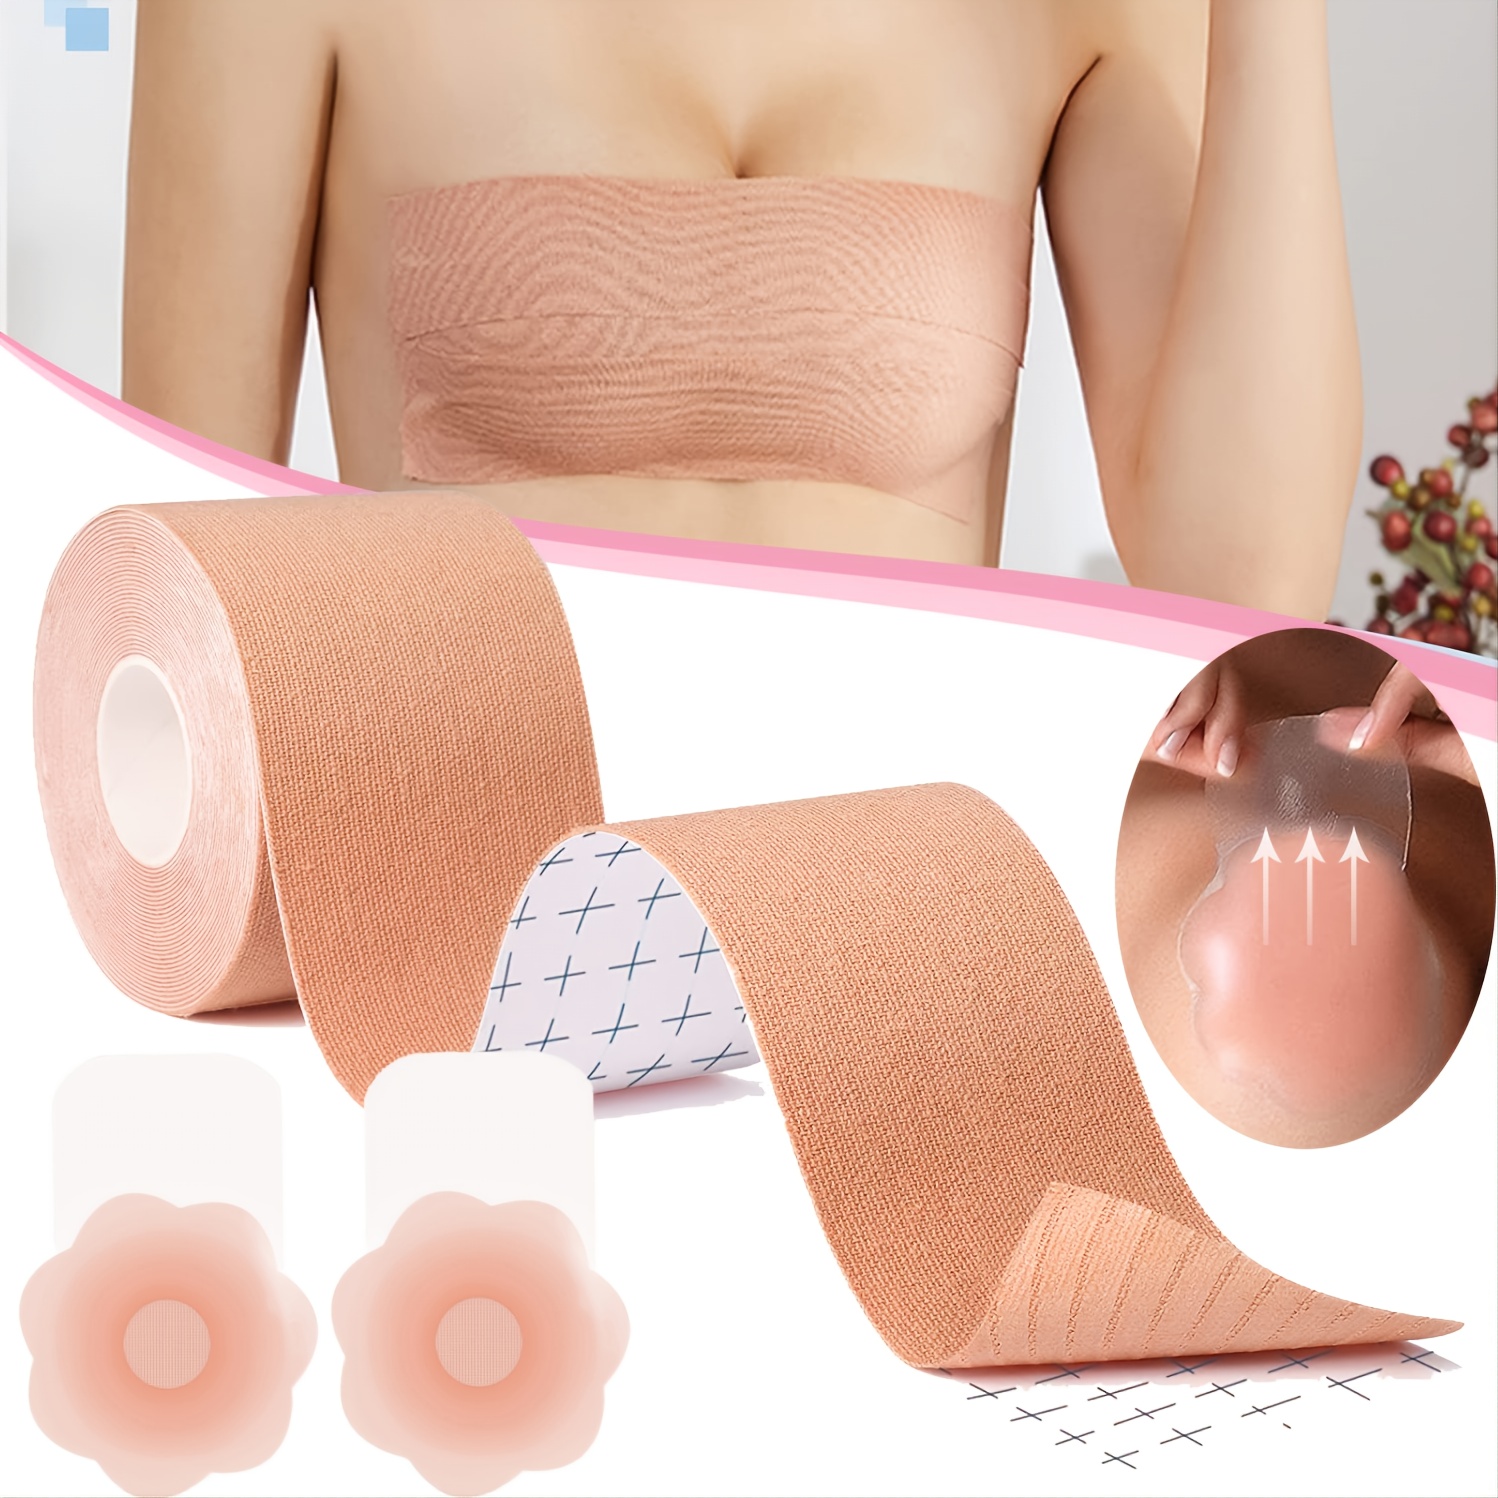 Cutewomen2020] 1 Roll 5M Cutable Chest Sticker Push Up Bra Body Invisible  Breast Lift Tape Adhesive Bras Chest Strap Elastic Cloth Bra Stickers